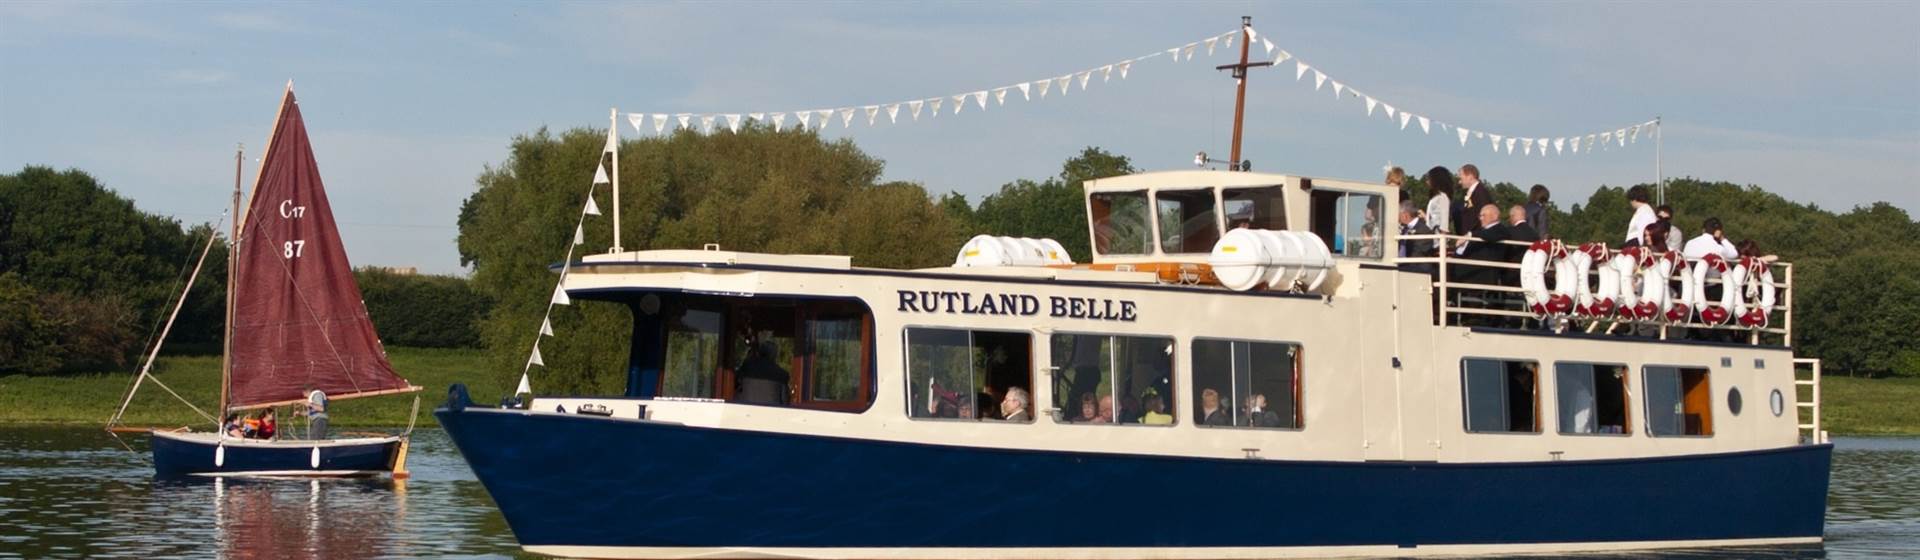 MMMelton Mowbray & Rutland Water Cruise